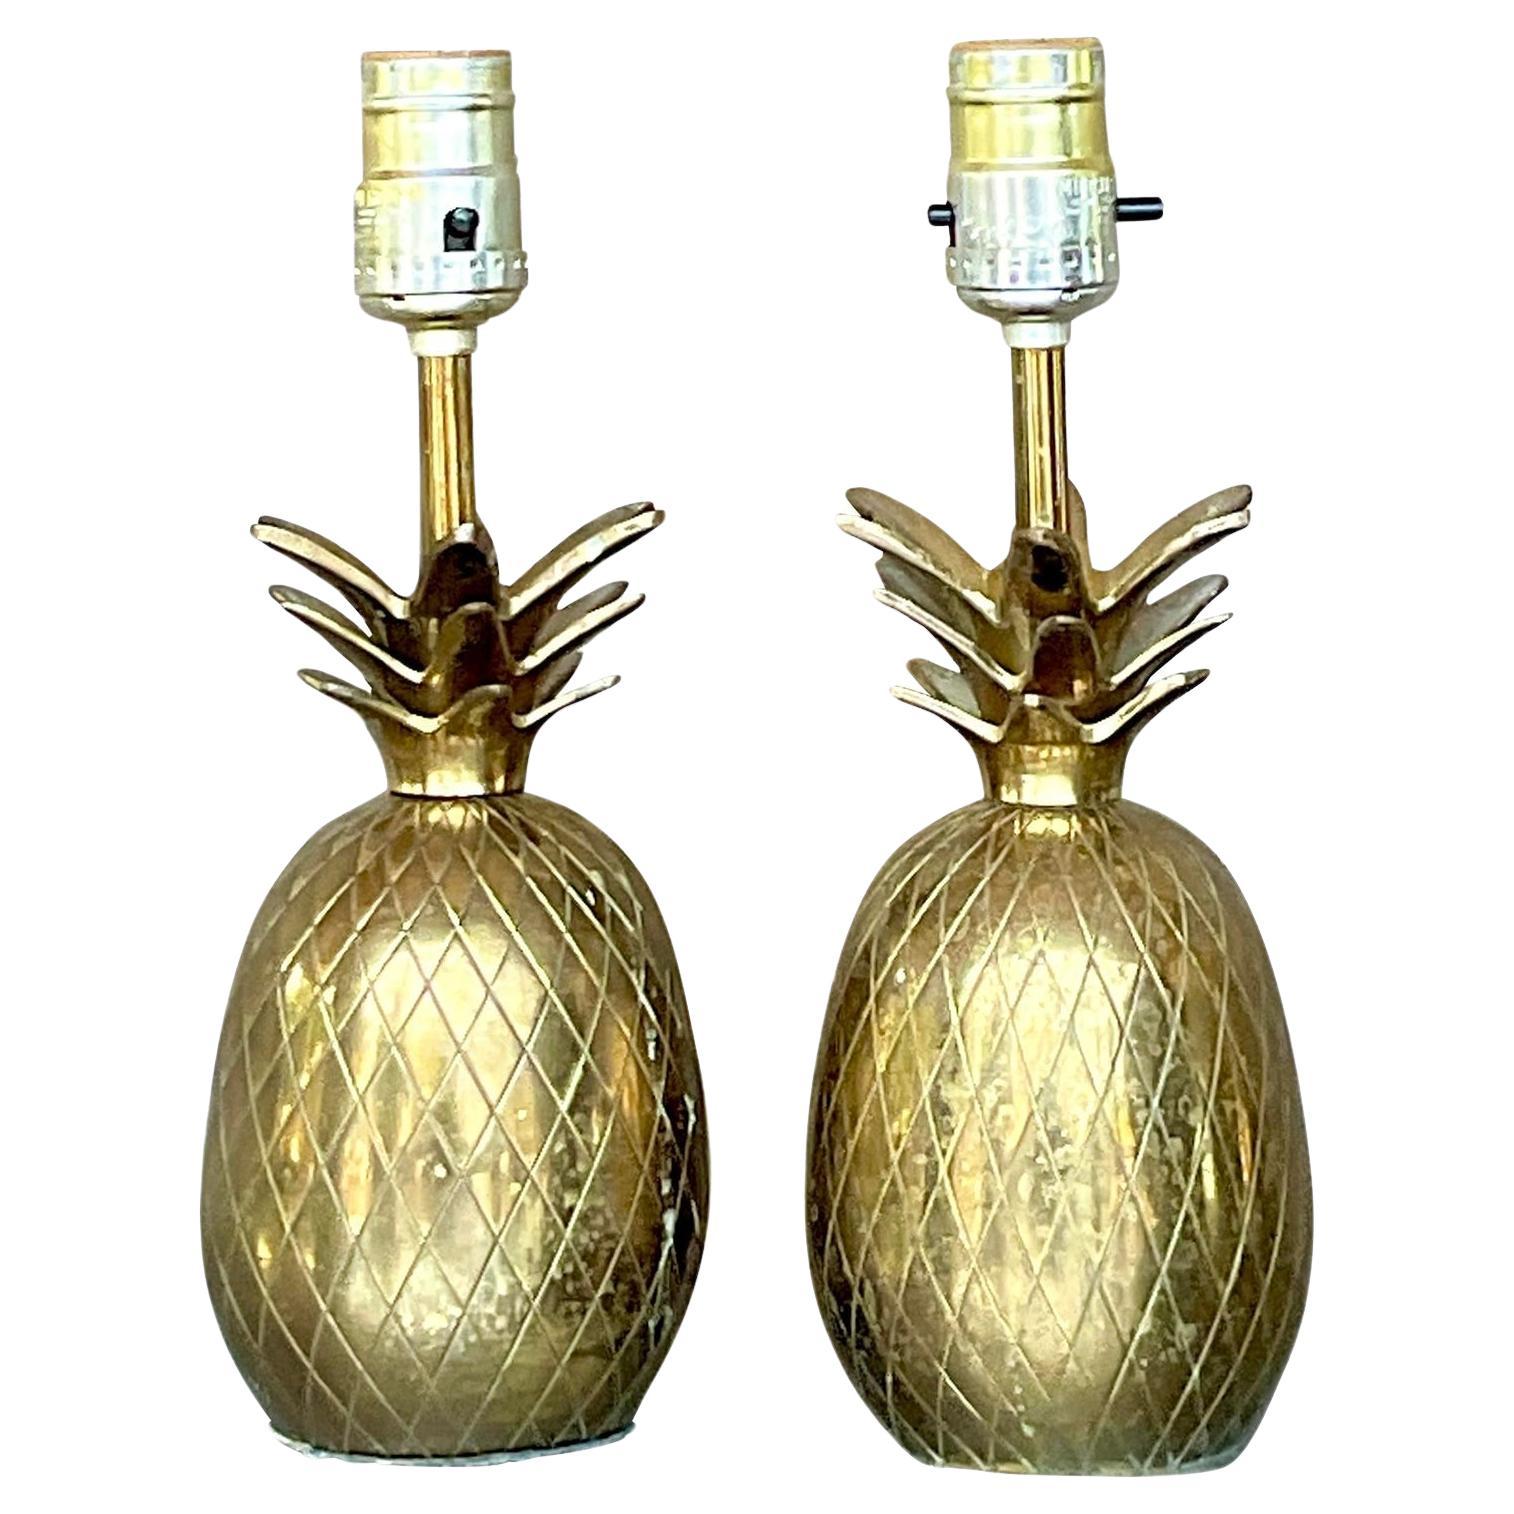 Vintage Coastal Brass Pineapple Lamps - a Pair